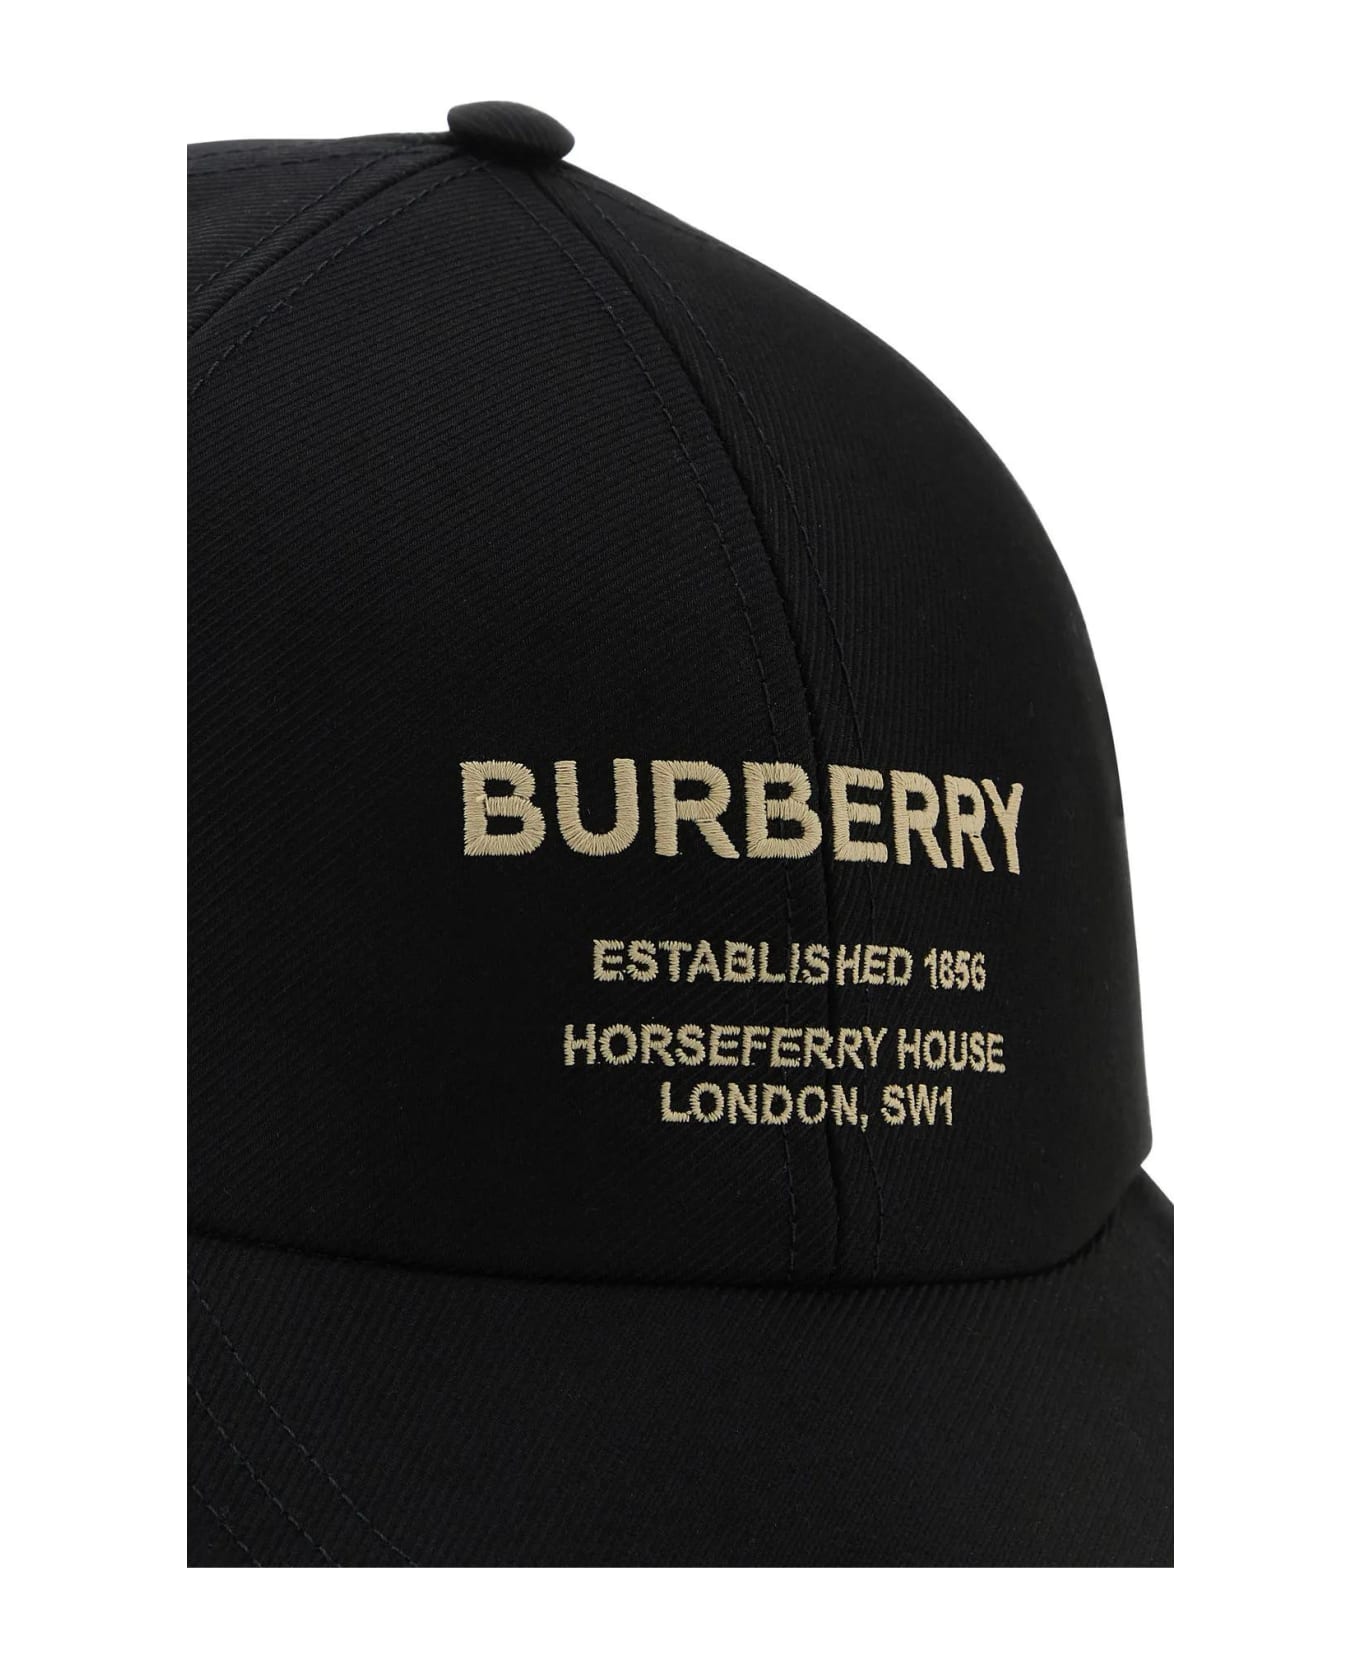 Burberry Black Cotton Baseball Cap - Black